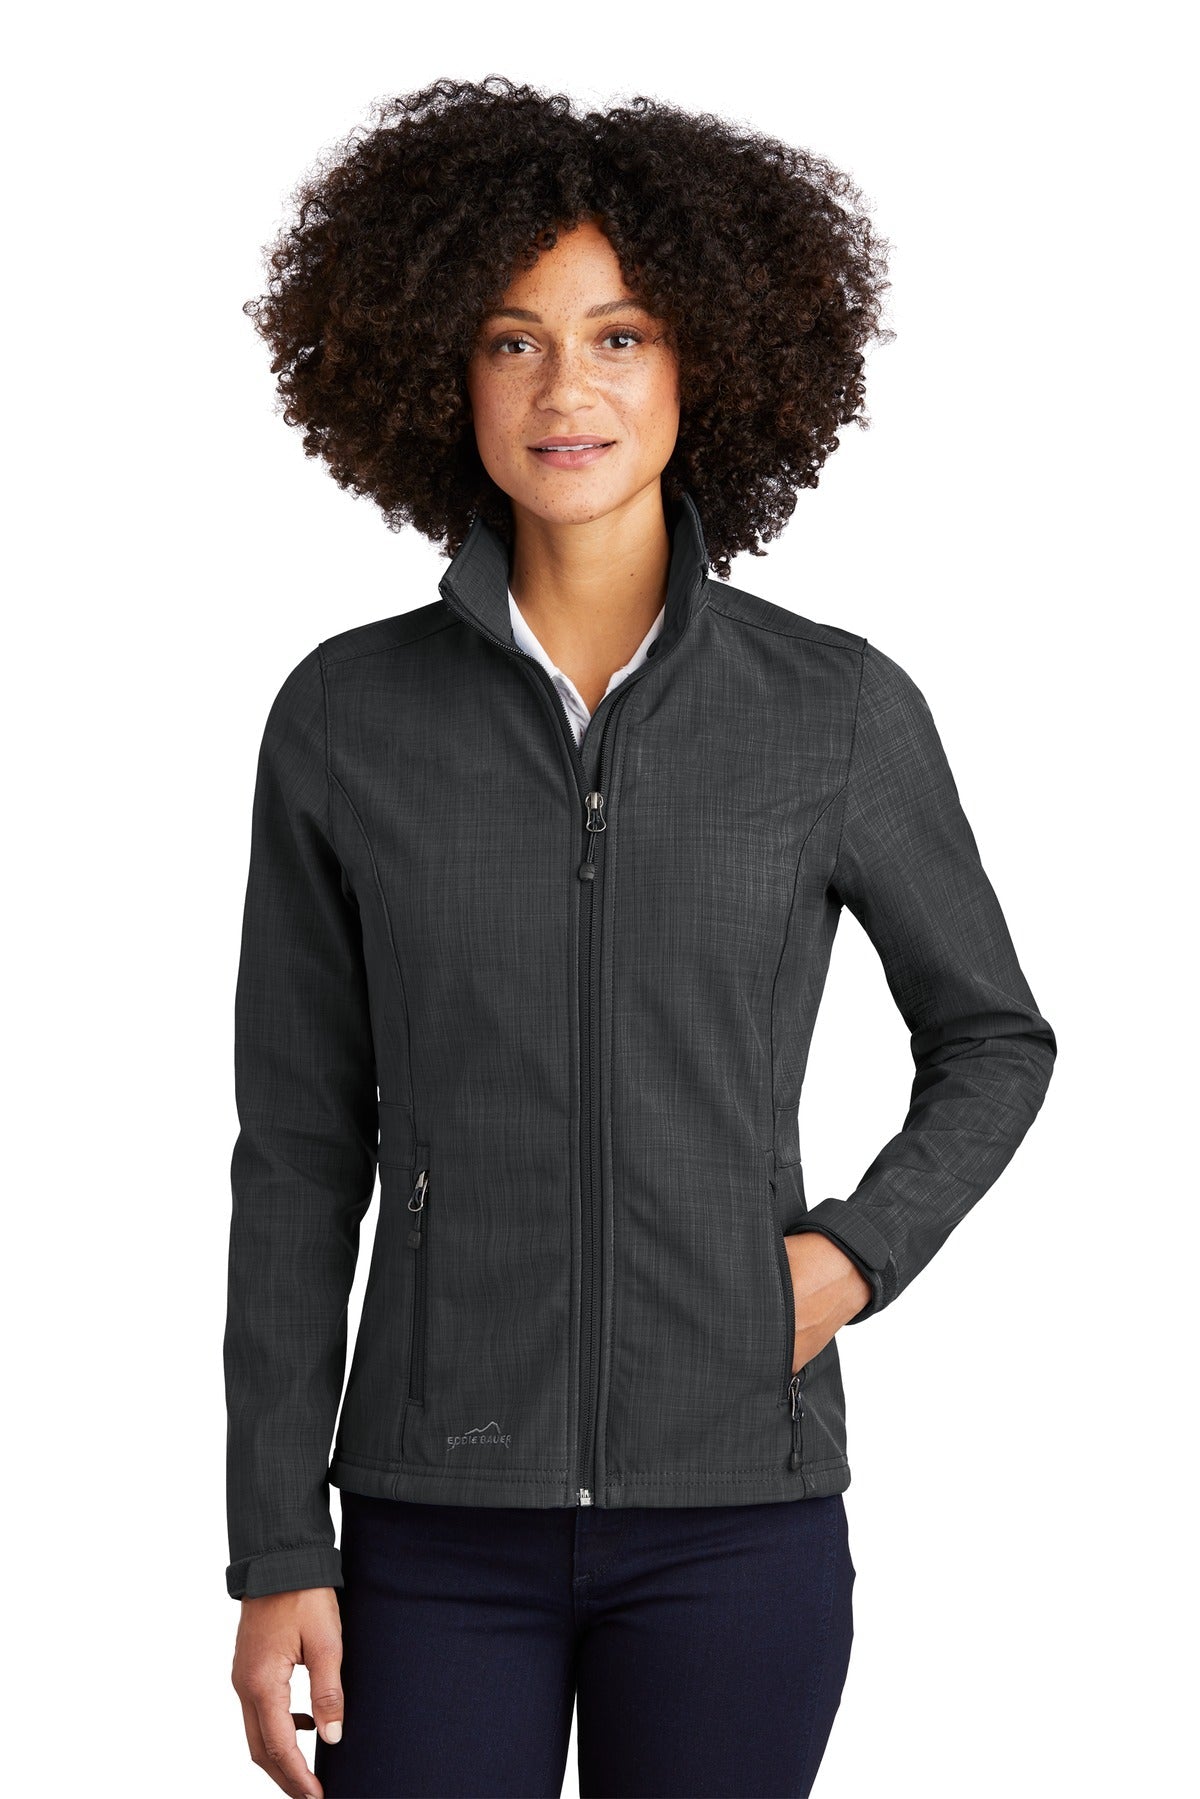 Eddie Bauer® Ladies Shaded Crosshatch Soft Shell Jacket. EB533 - DFW Impression